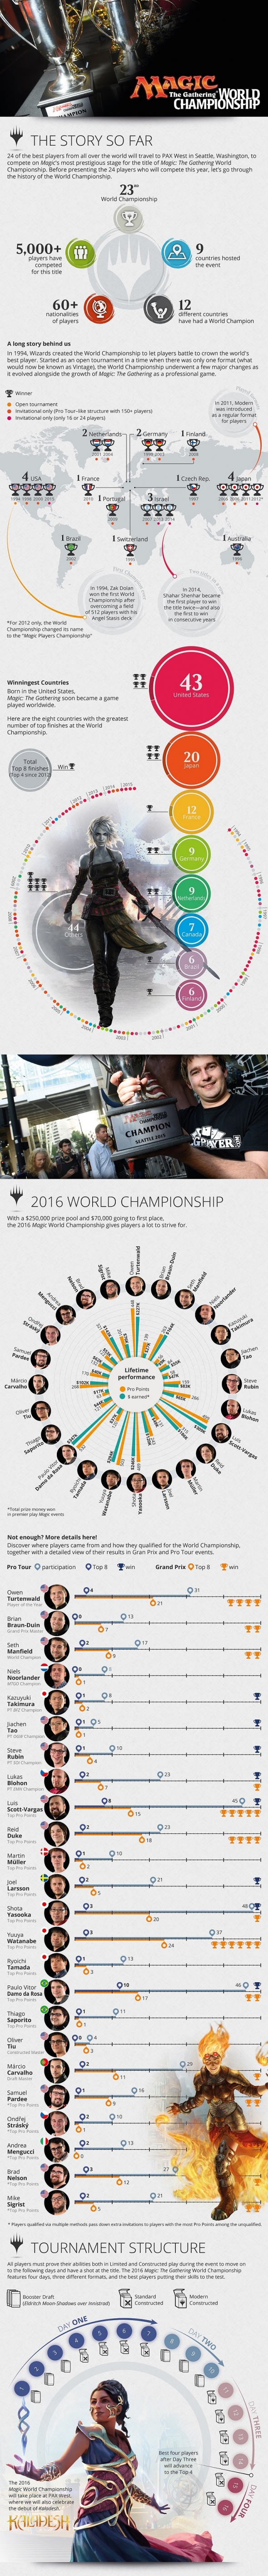 Infografika k Magic: the Gathering World Magic Championship